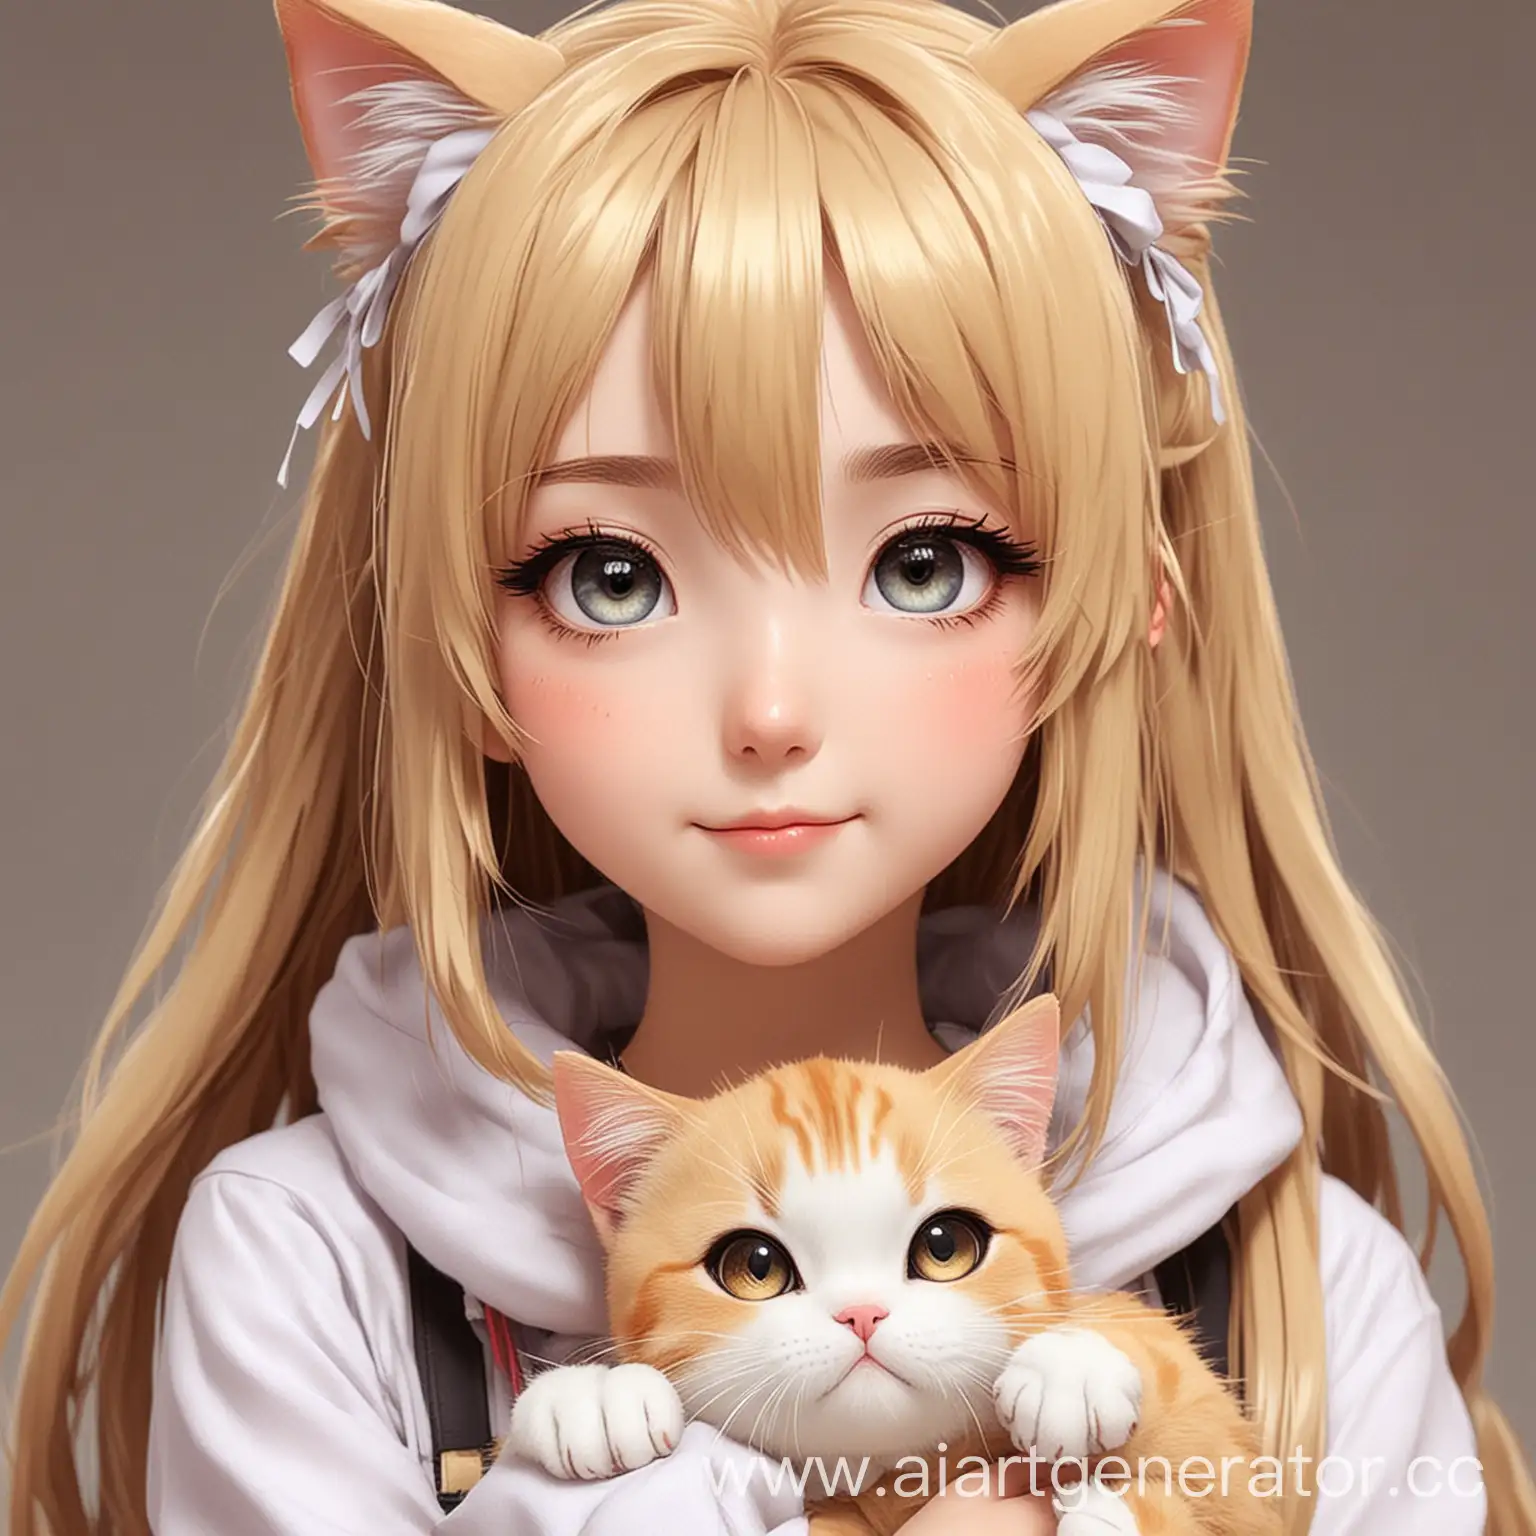 Cute-Anime-Girl-with-Neko-the-Cat